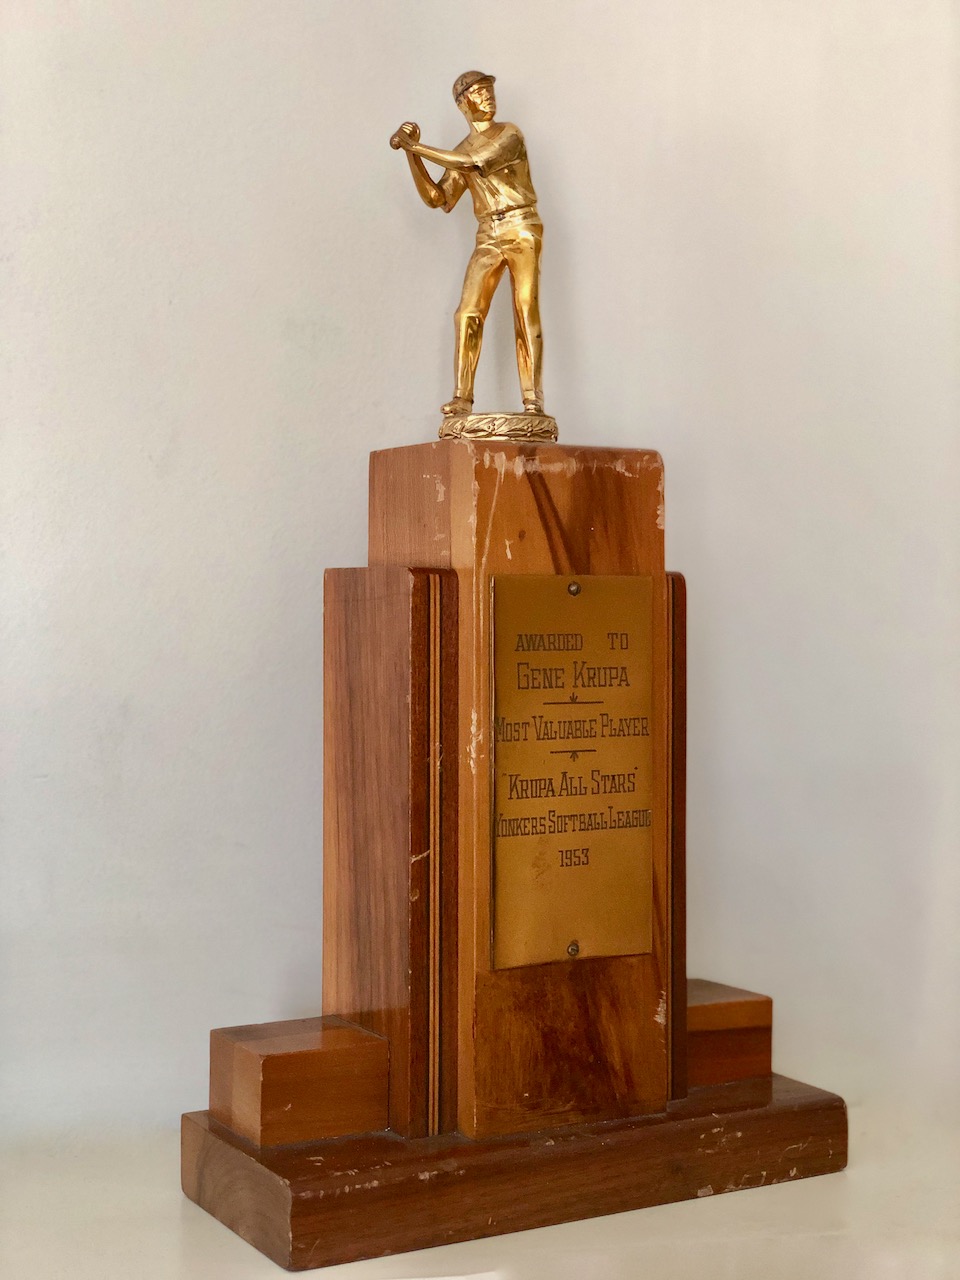 Gene Krupa's 1953 Most Valuable Player Trophy